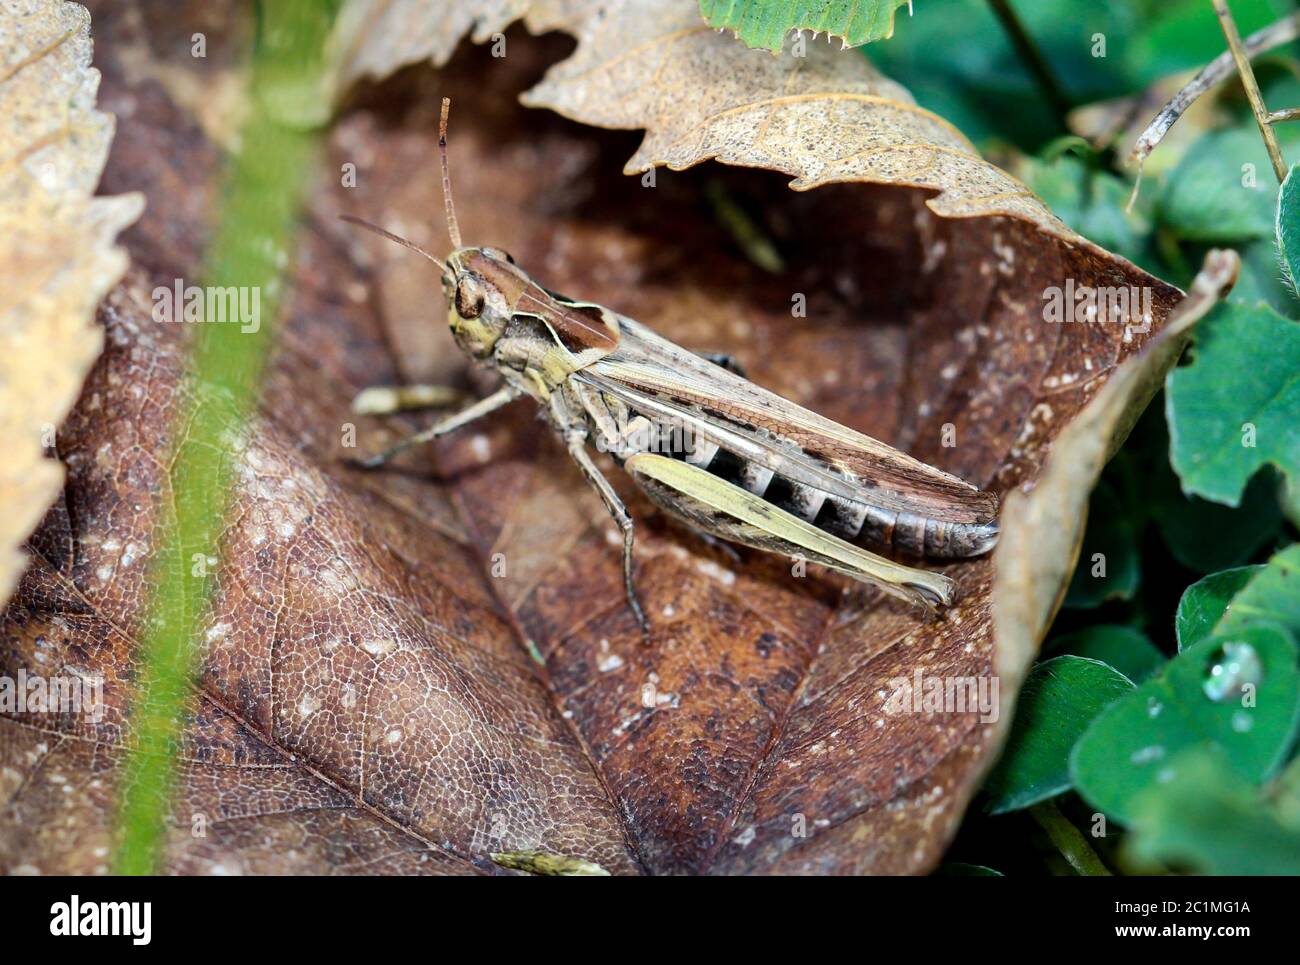 a grasshopper on a leaf Stock Photo